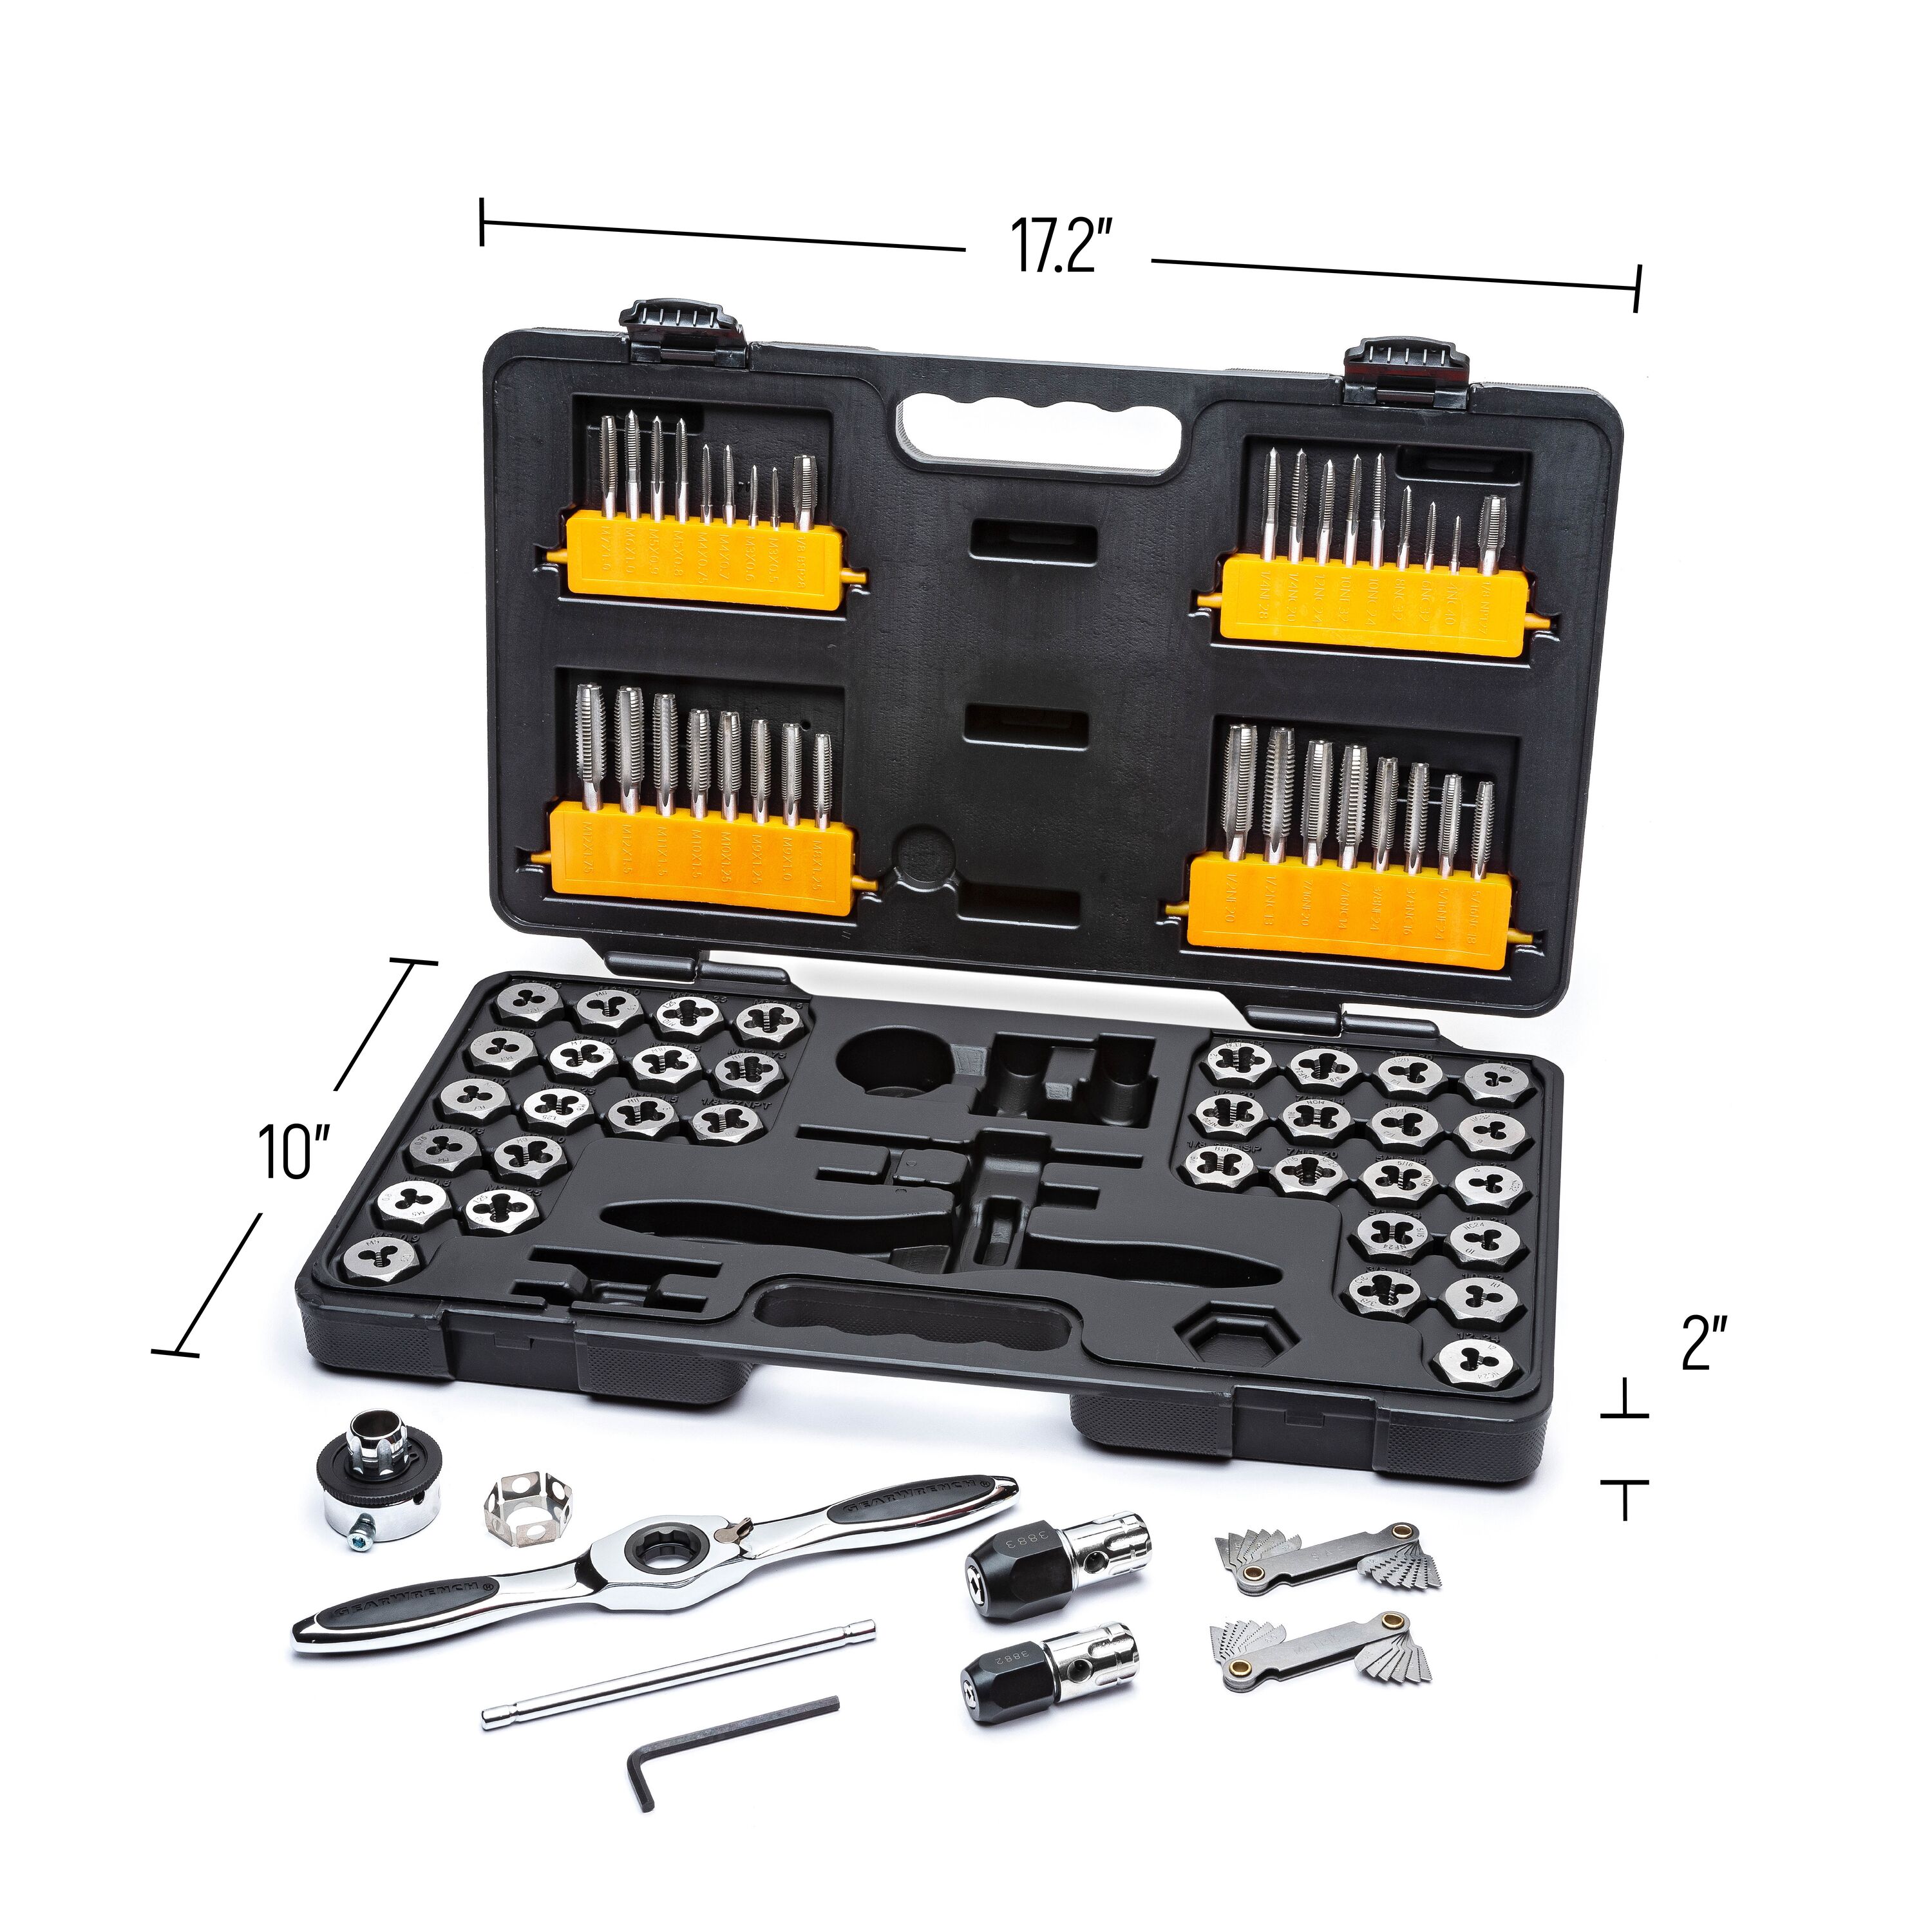 E-Z LOK Thread Repair Kit Includes: 1/2-20 Heavy Duty Inserts, Tap & Drill